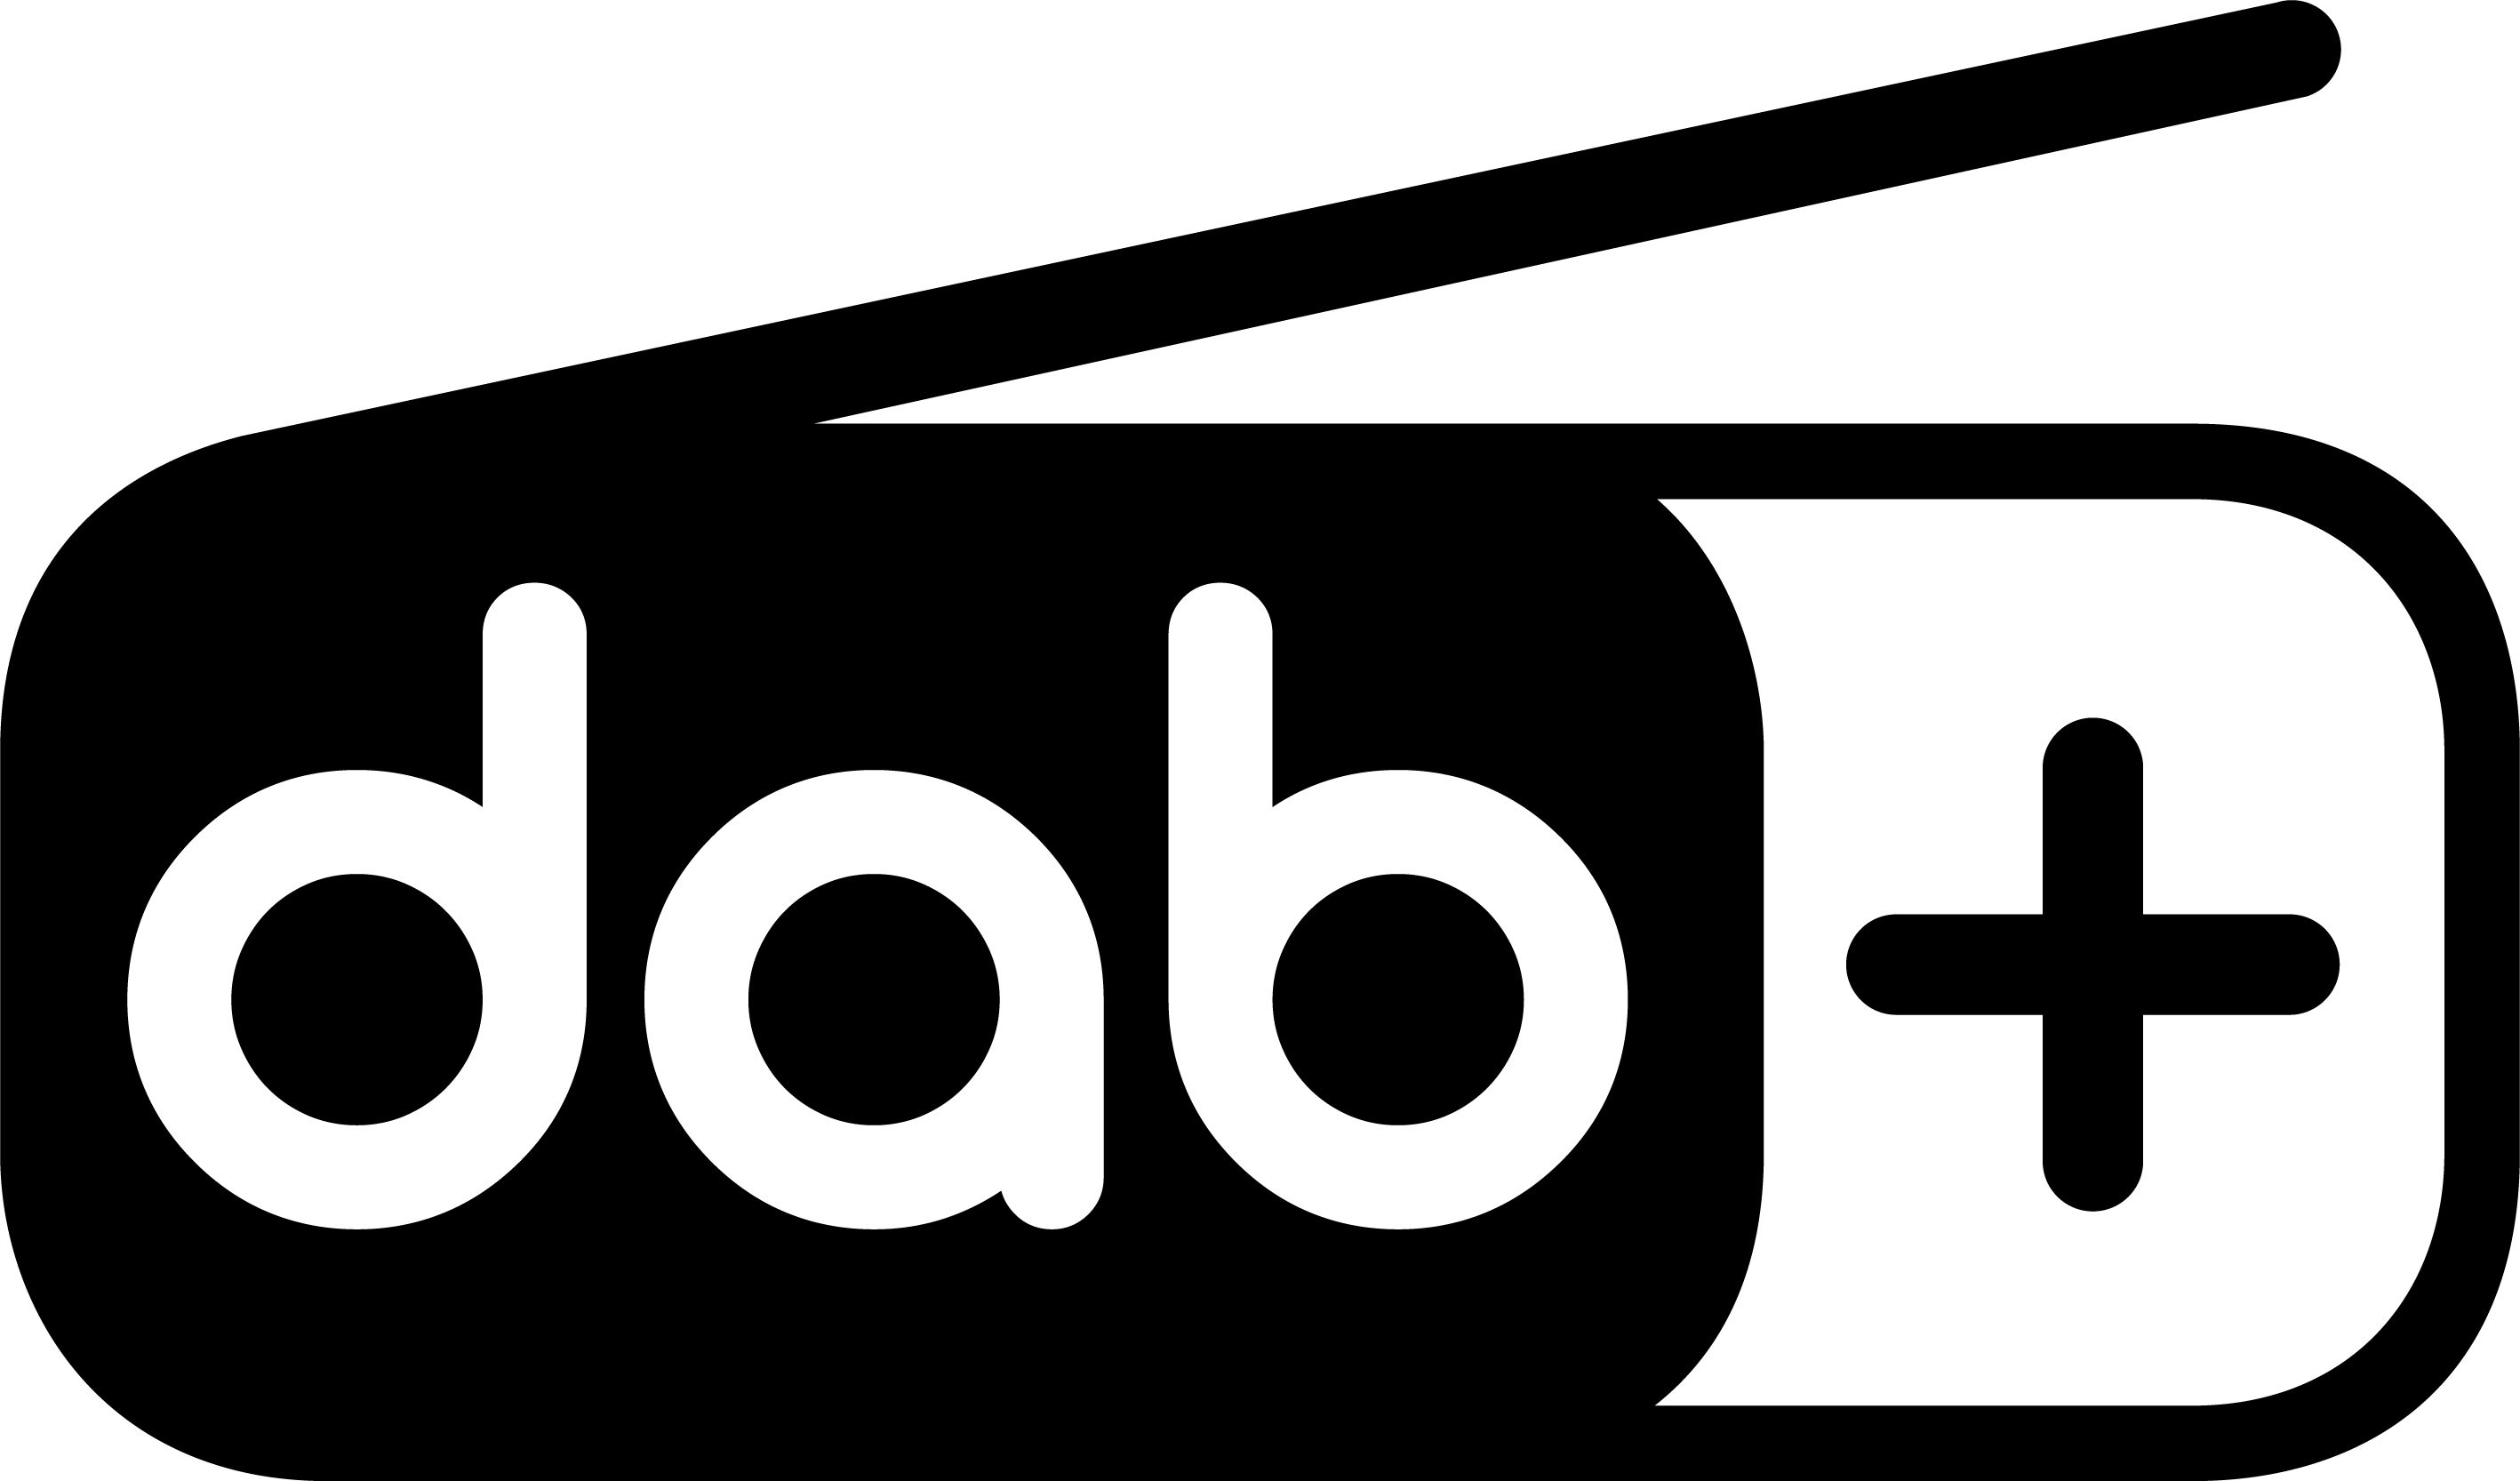 Enceinte radio réveil Bluetooth JBL Horizon 2 Gris avec DAB/DAB+/FM - Radio- réveil - Achat & prix